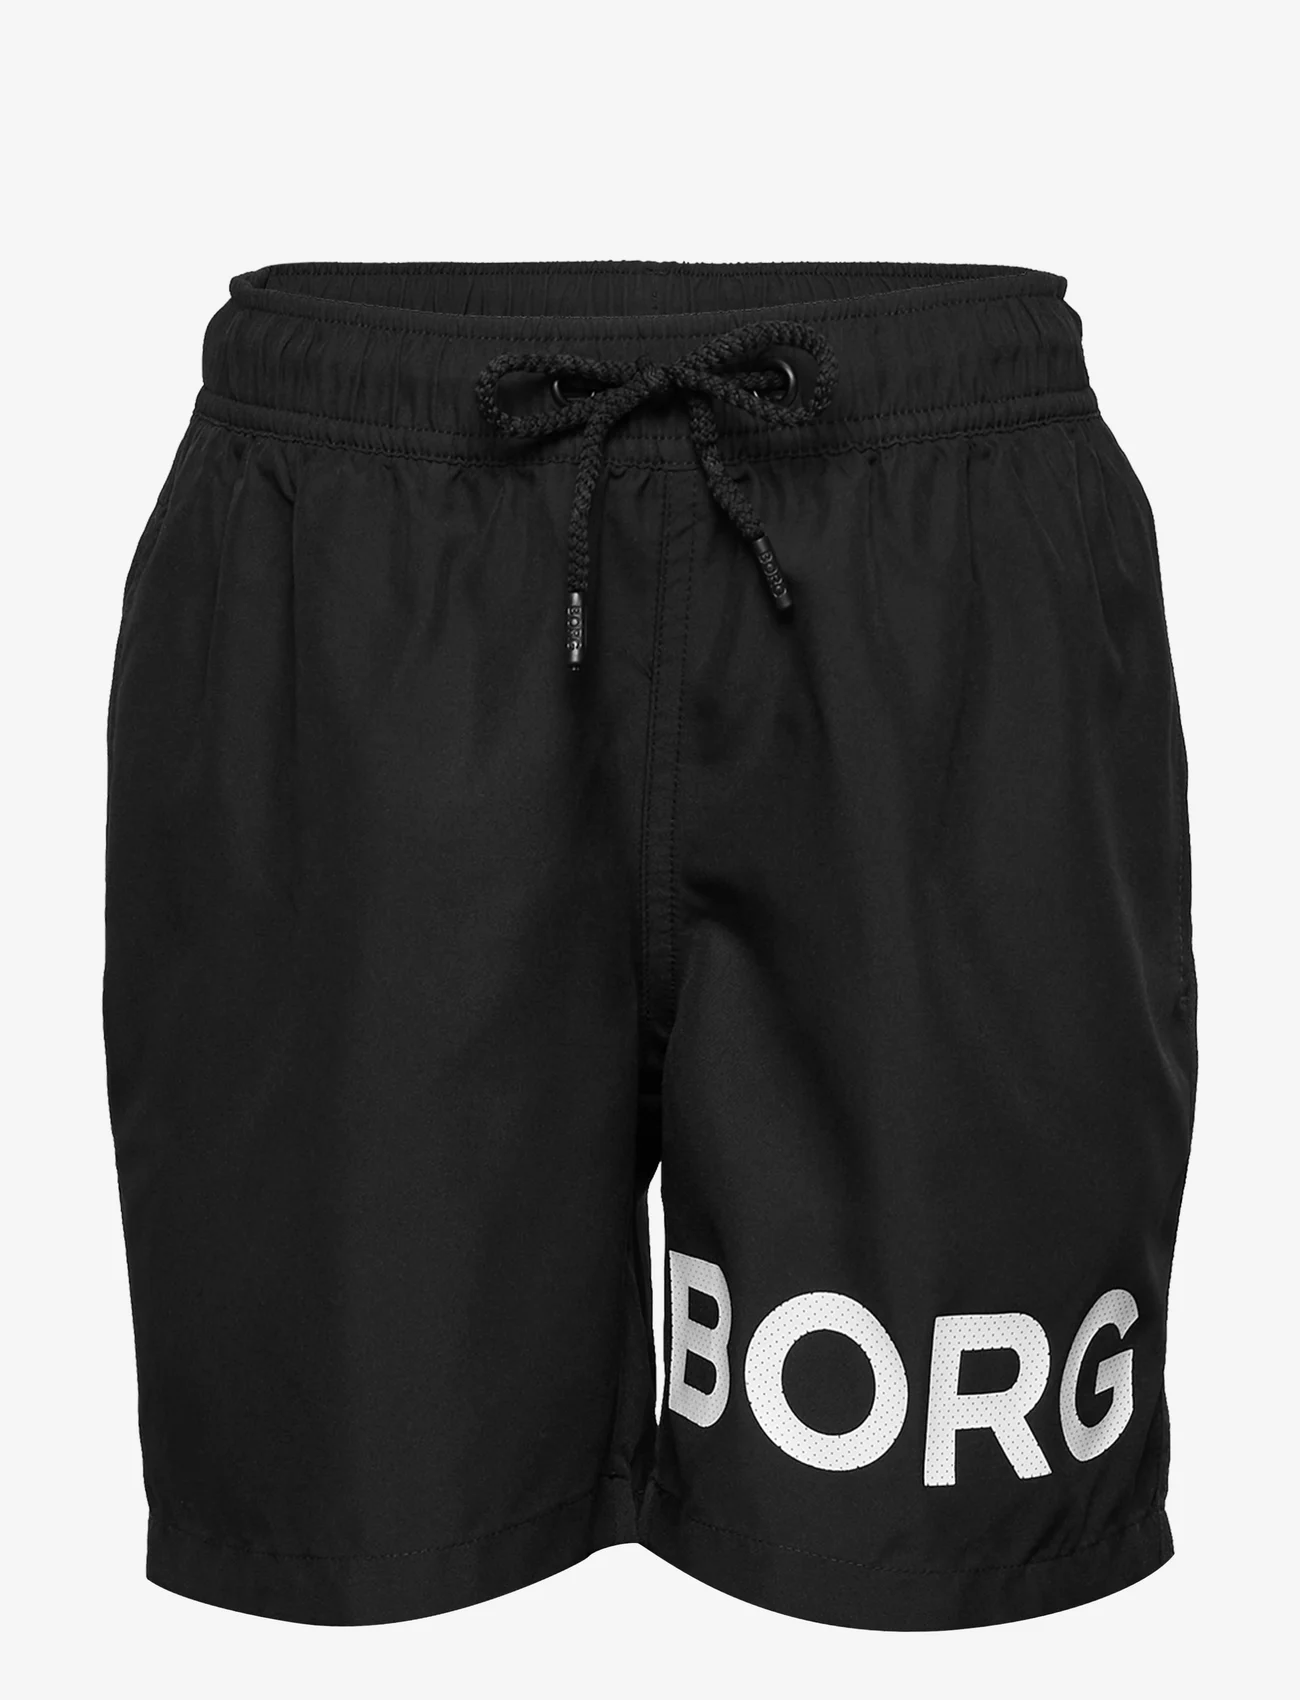 Björn Borg - BORG SWIM SHORTS - swim shorts - black beauty - 0